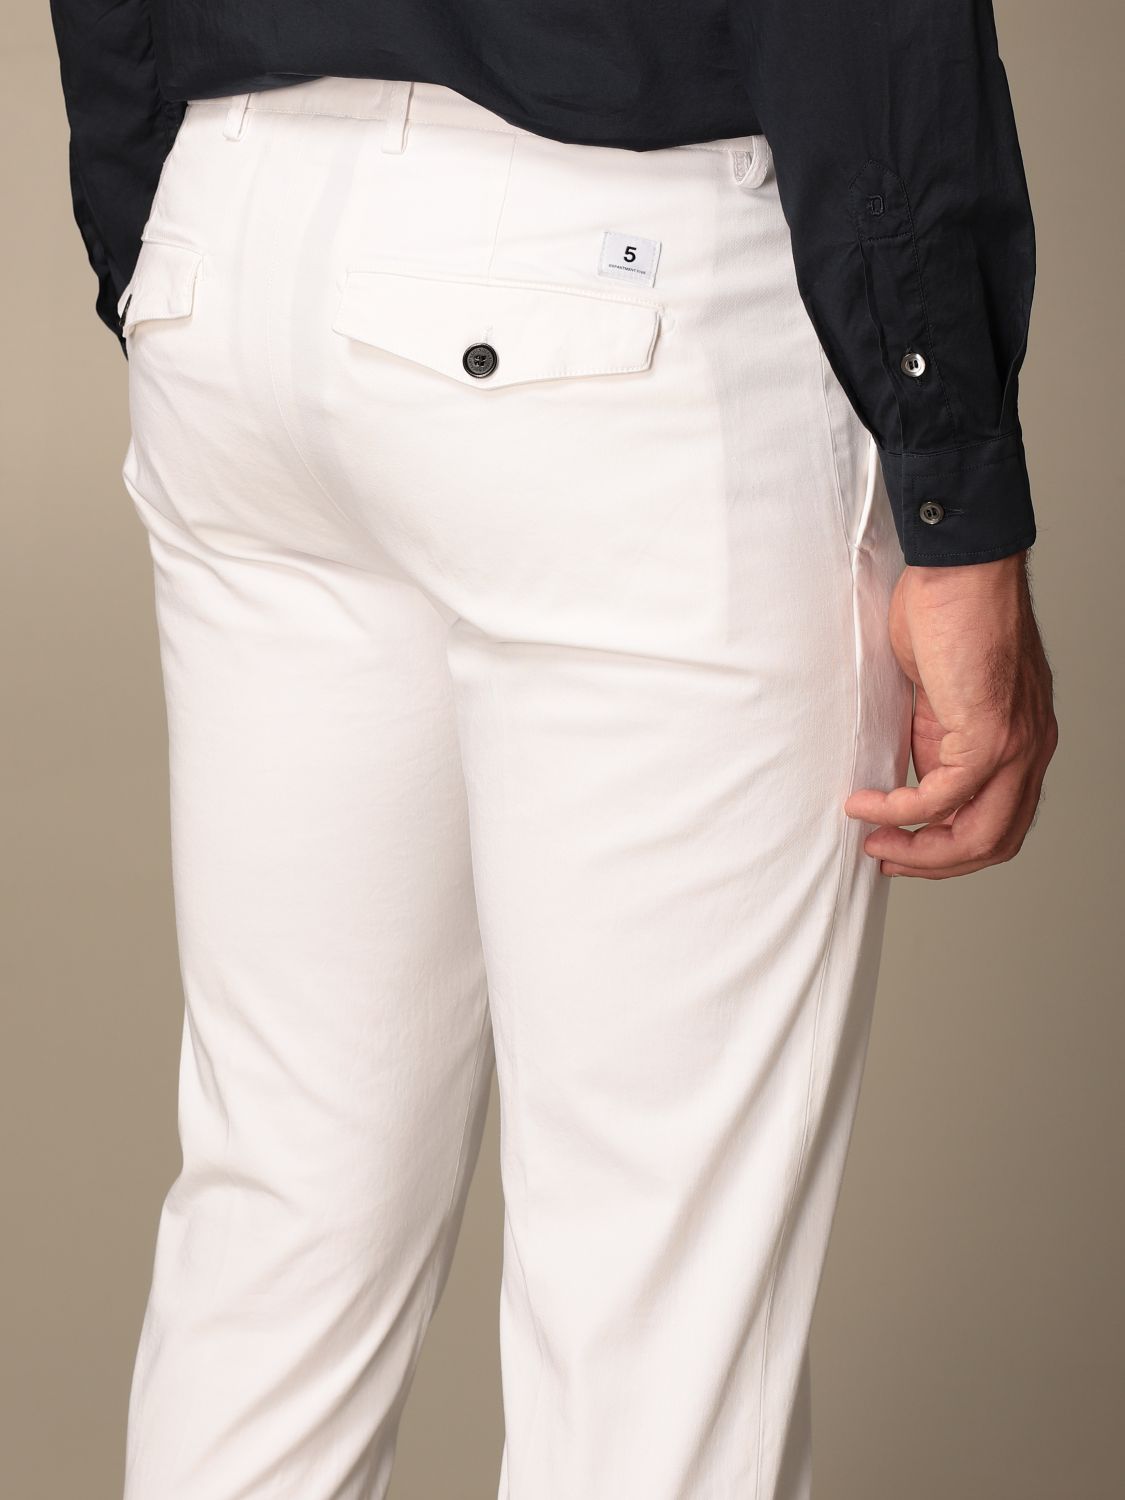 Pantalon Department 5: Pantalon Department 5 homme blanc 3